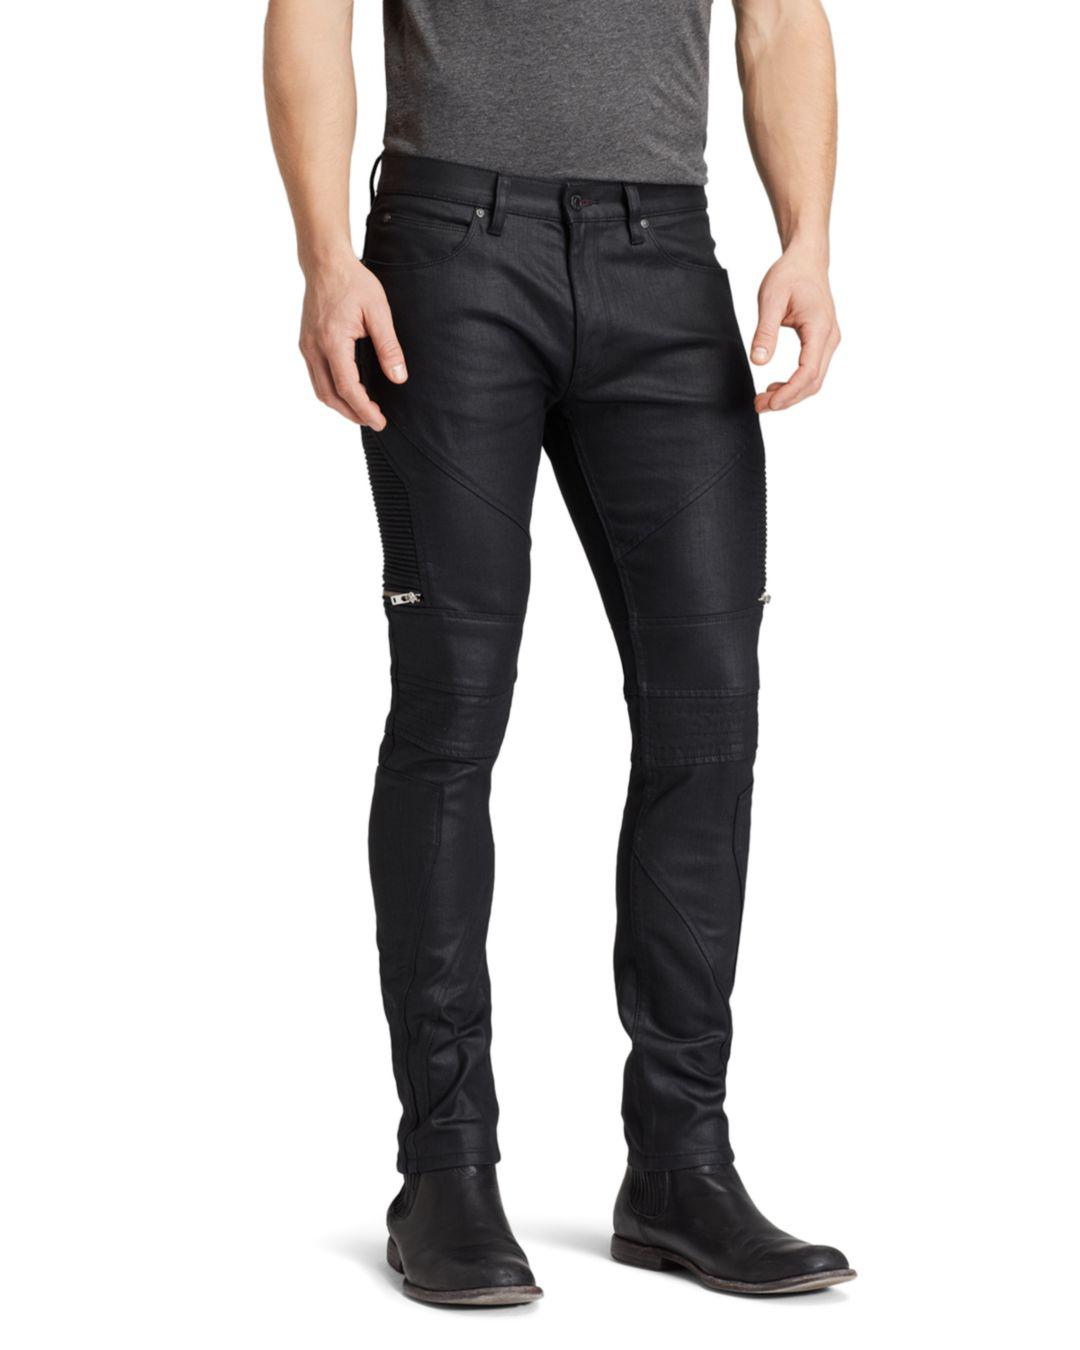 HUGO Denim Jeans - 45 Moto Slim Fit In Black for Men - Lyst